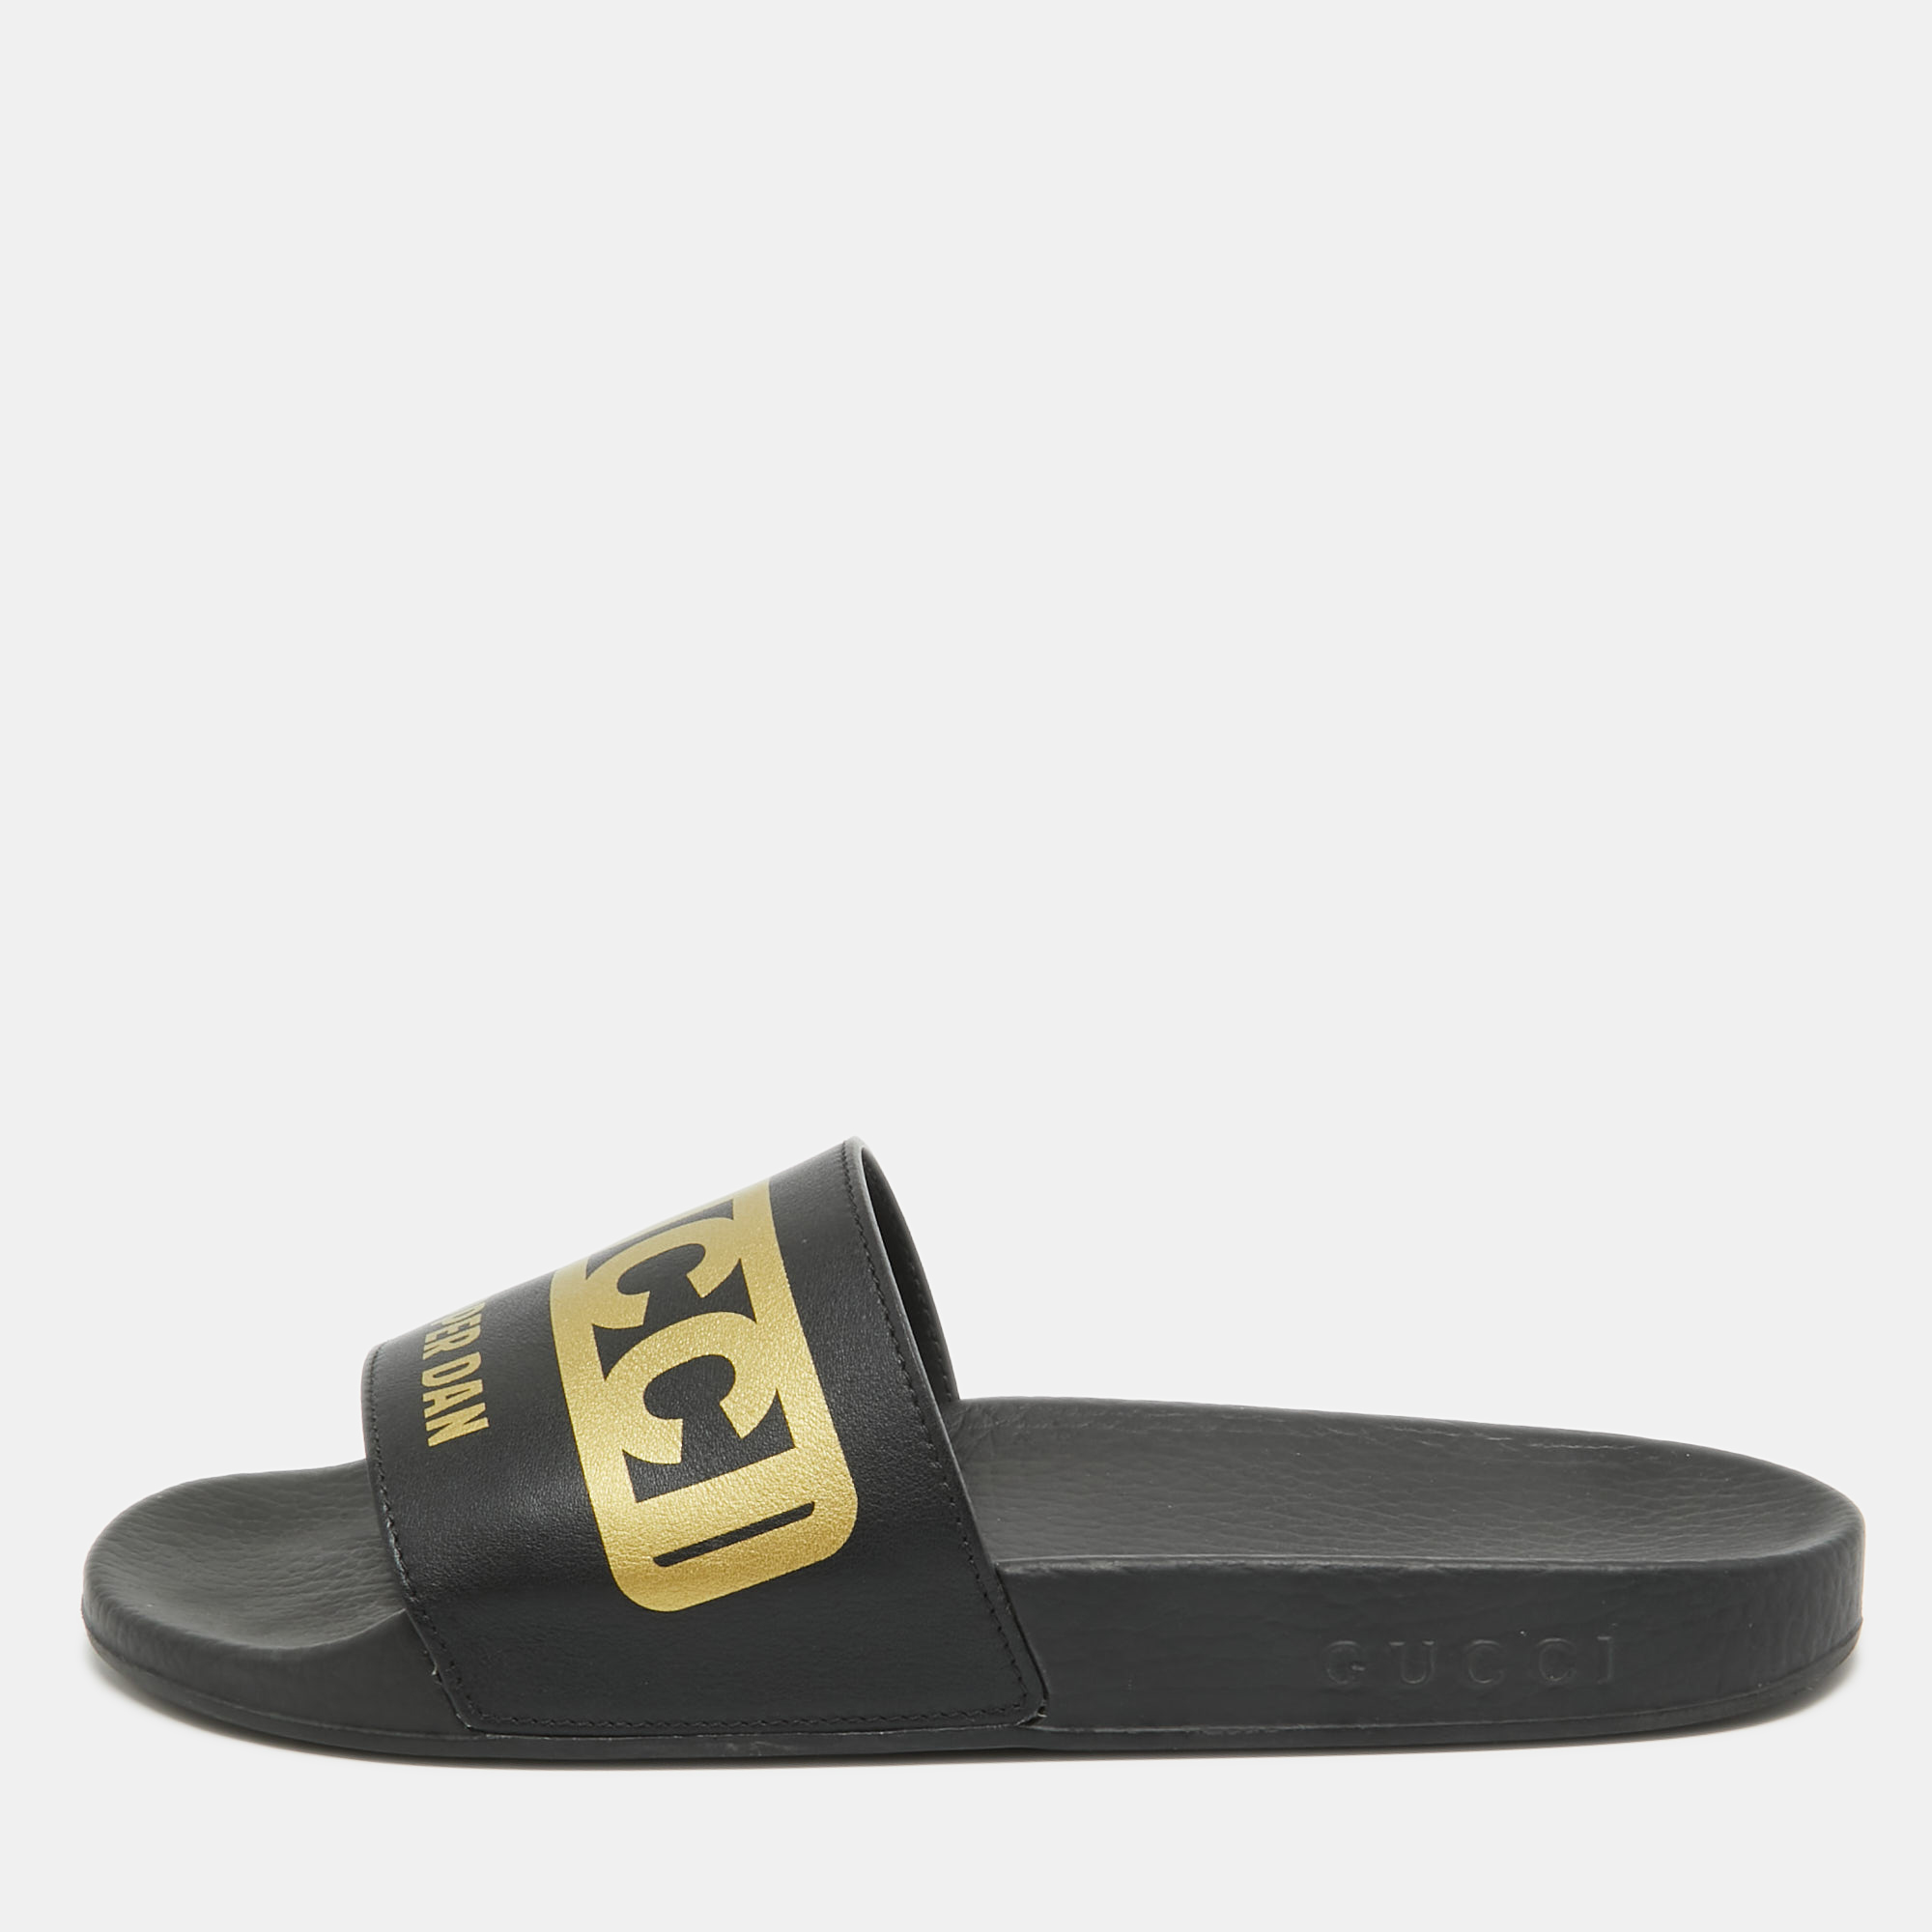 Pre-owned Gucci Black/gold Leather Dapper Dan Pool Slides Size 39